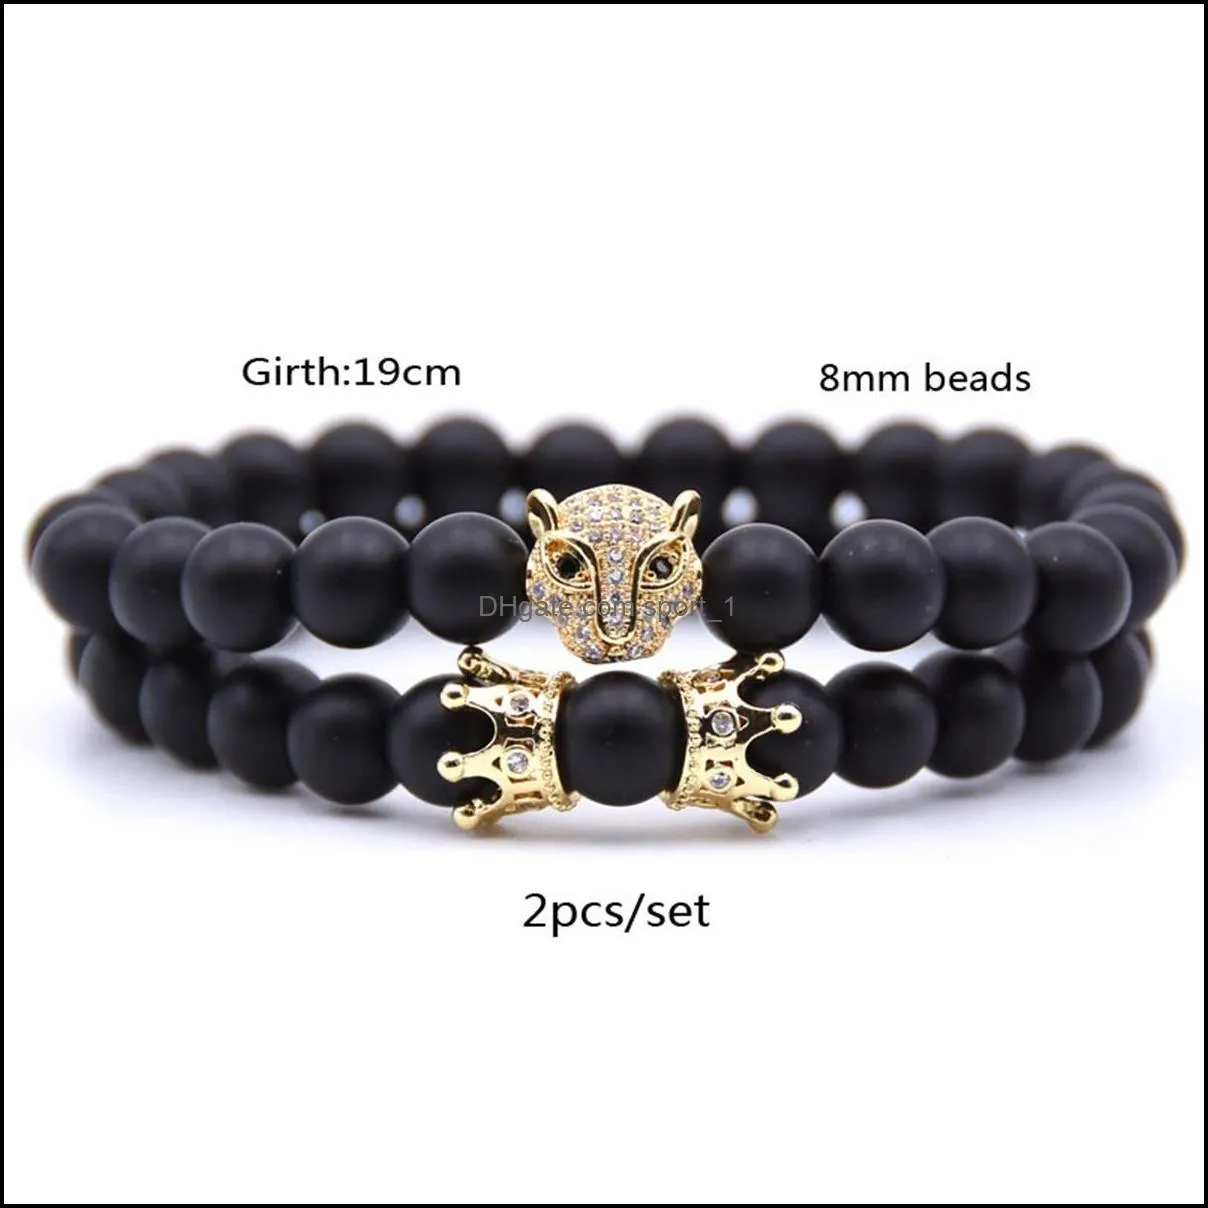 10pc/set wholesale fox crown bracelet sets black matte mala stone for men women handmade custom jewelry